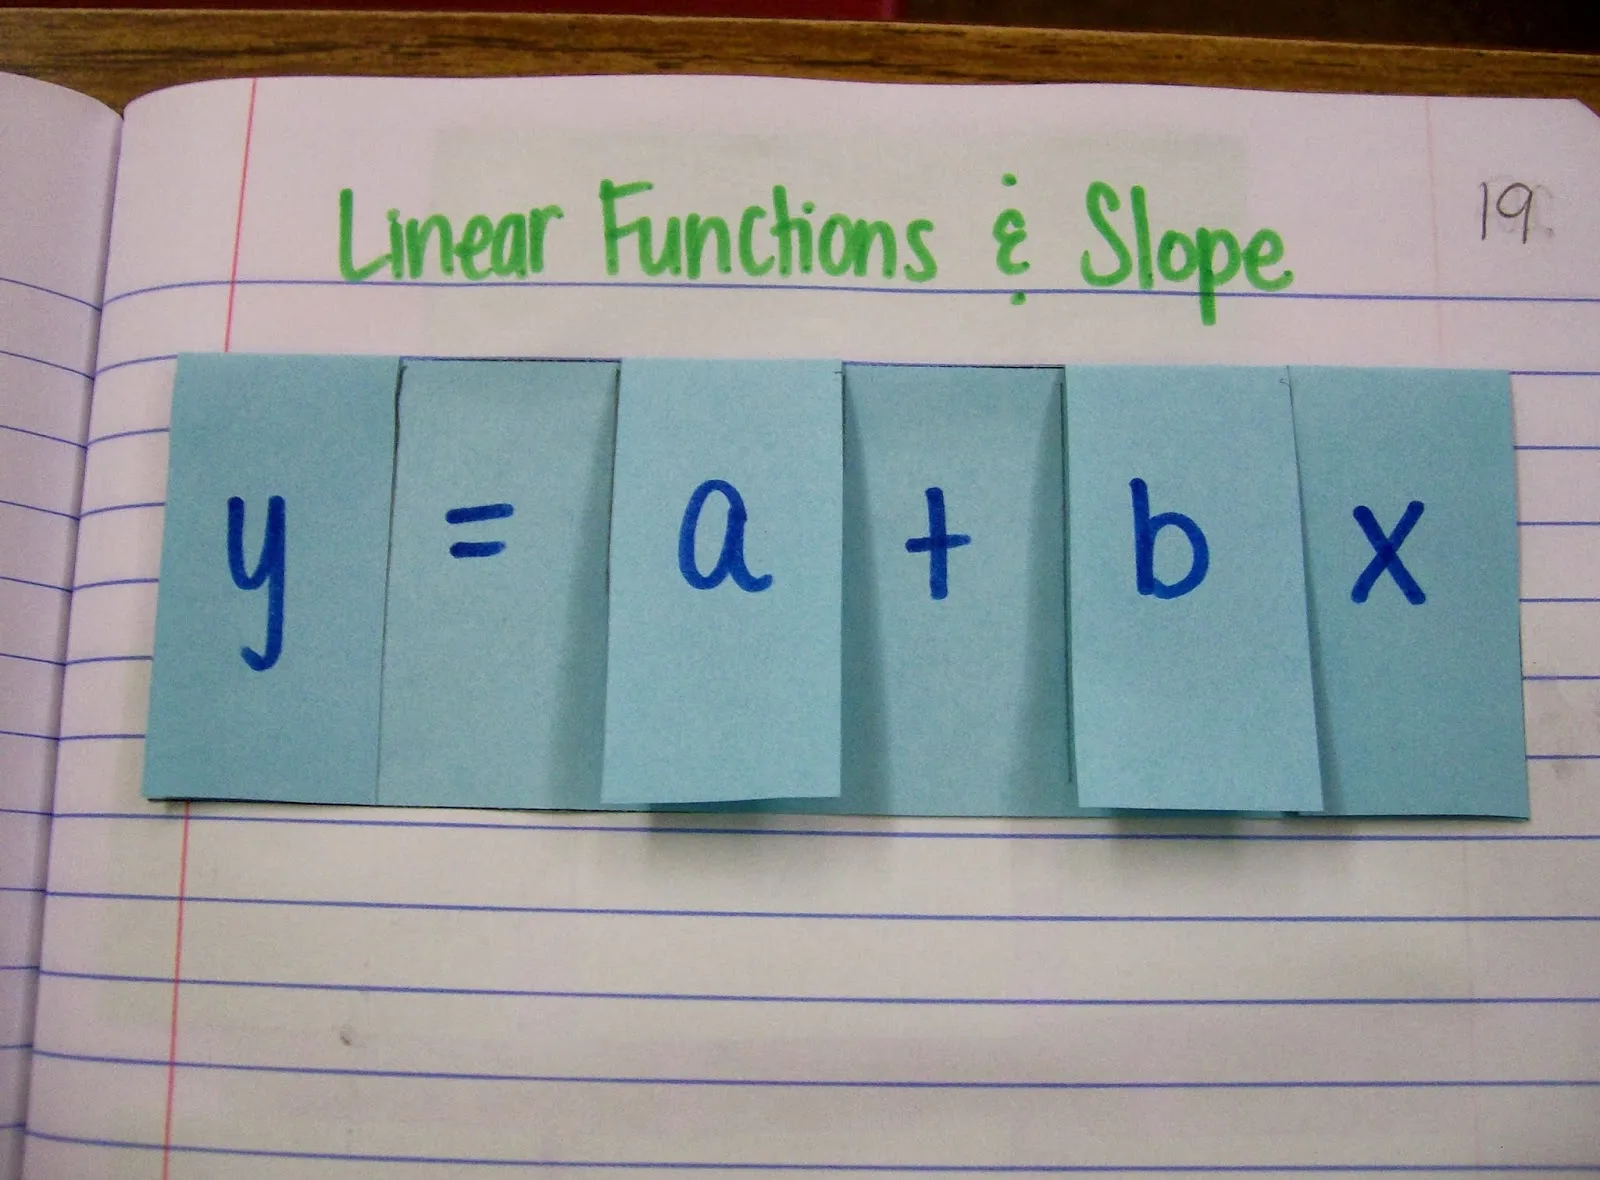 linear foldable y=a+bx algebra interactive notebook math inbs